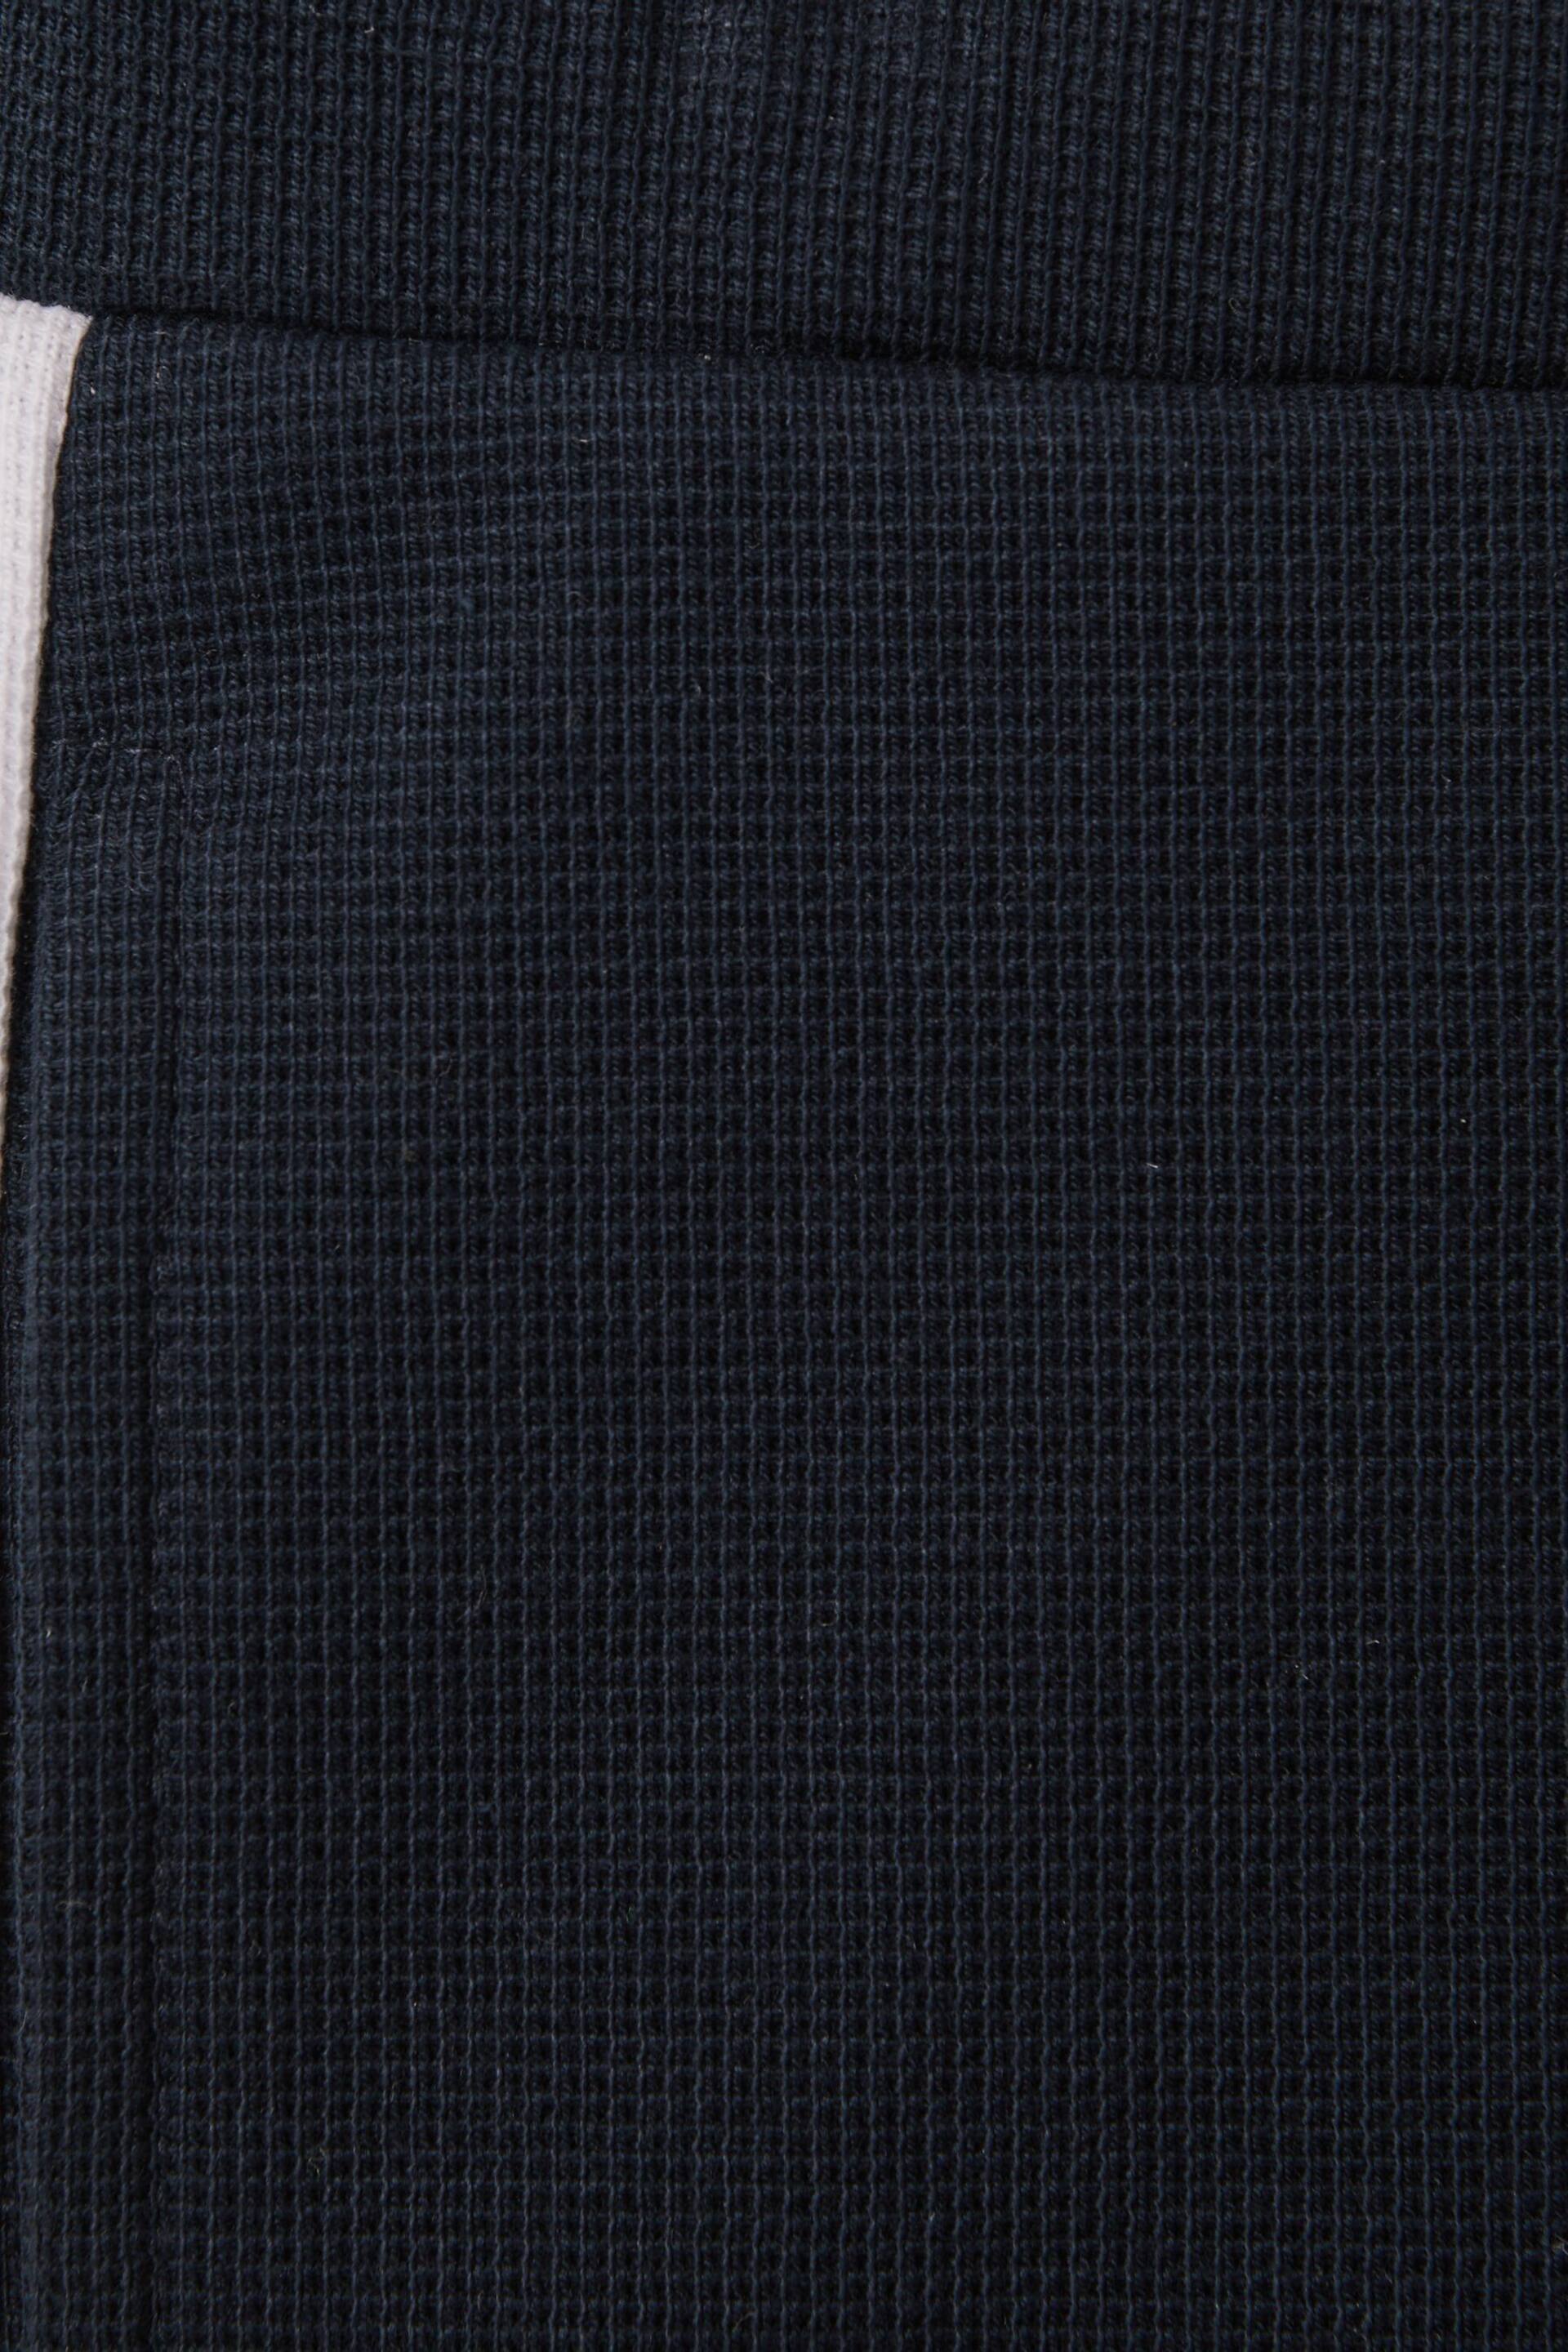 Reiss Navy/White Marl Teen Textured Cotton Drawstring Shorts - Image 4 of 4